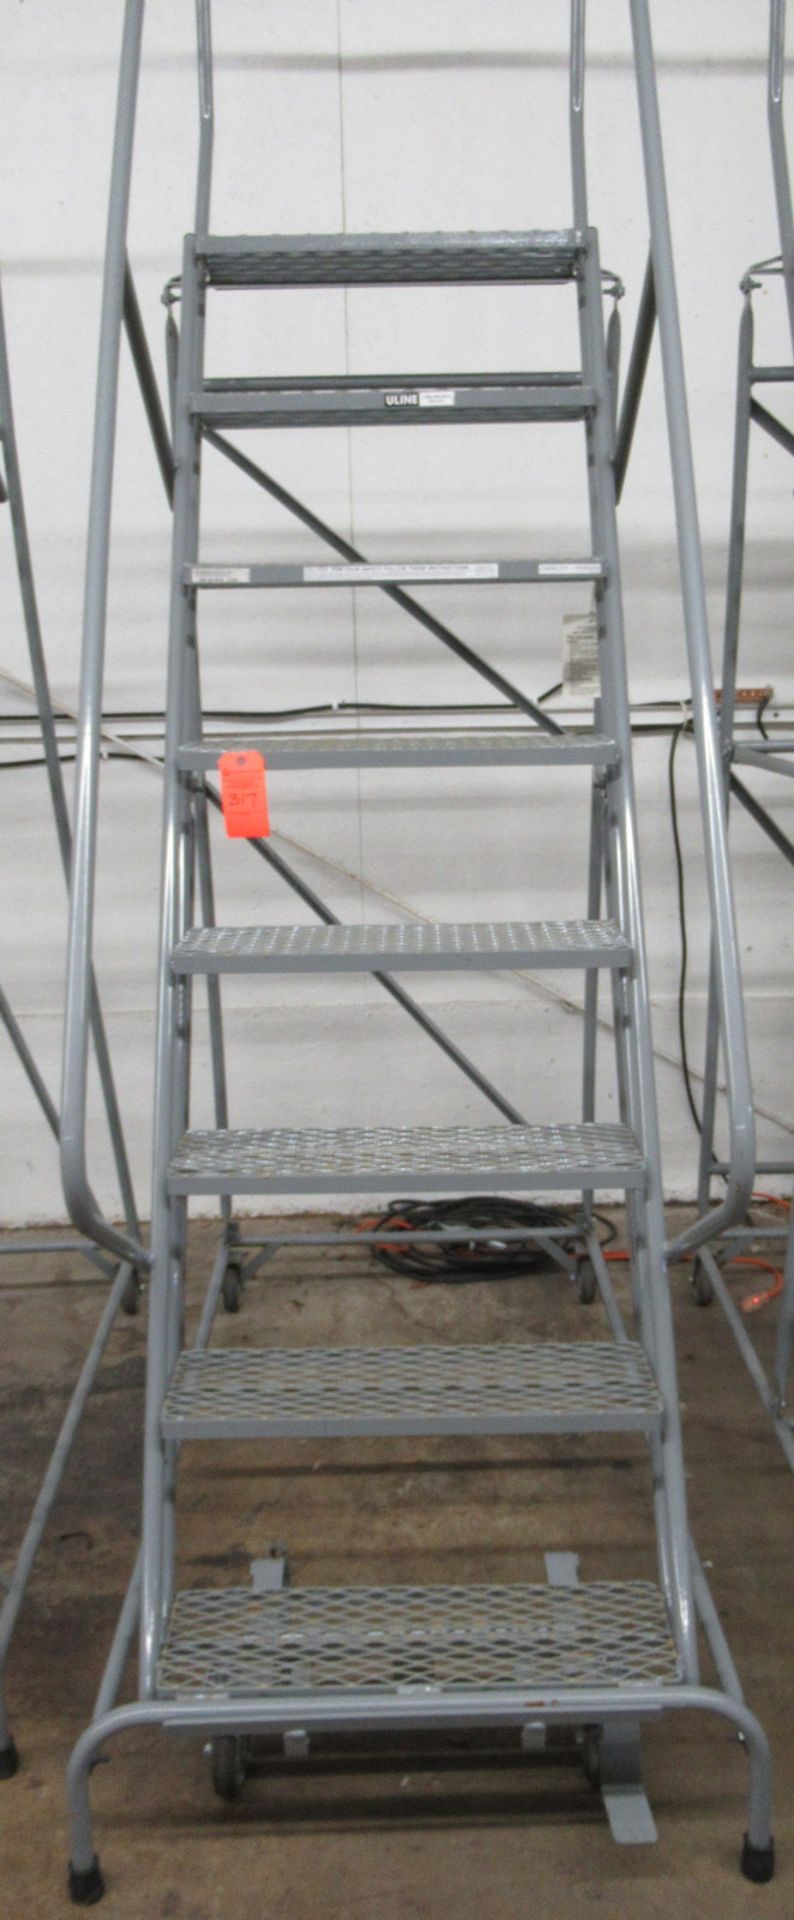 Uline H-1084-10 8 Step Rolling Safety Ladder 80" Platform Height